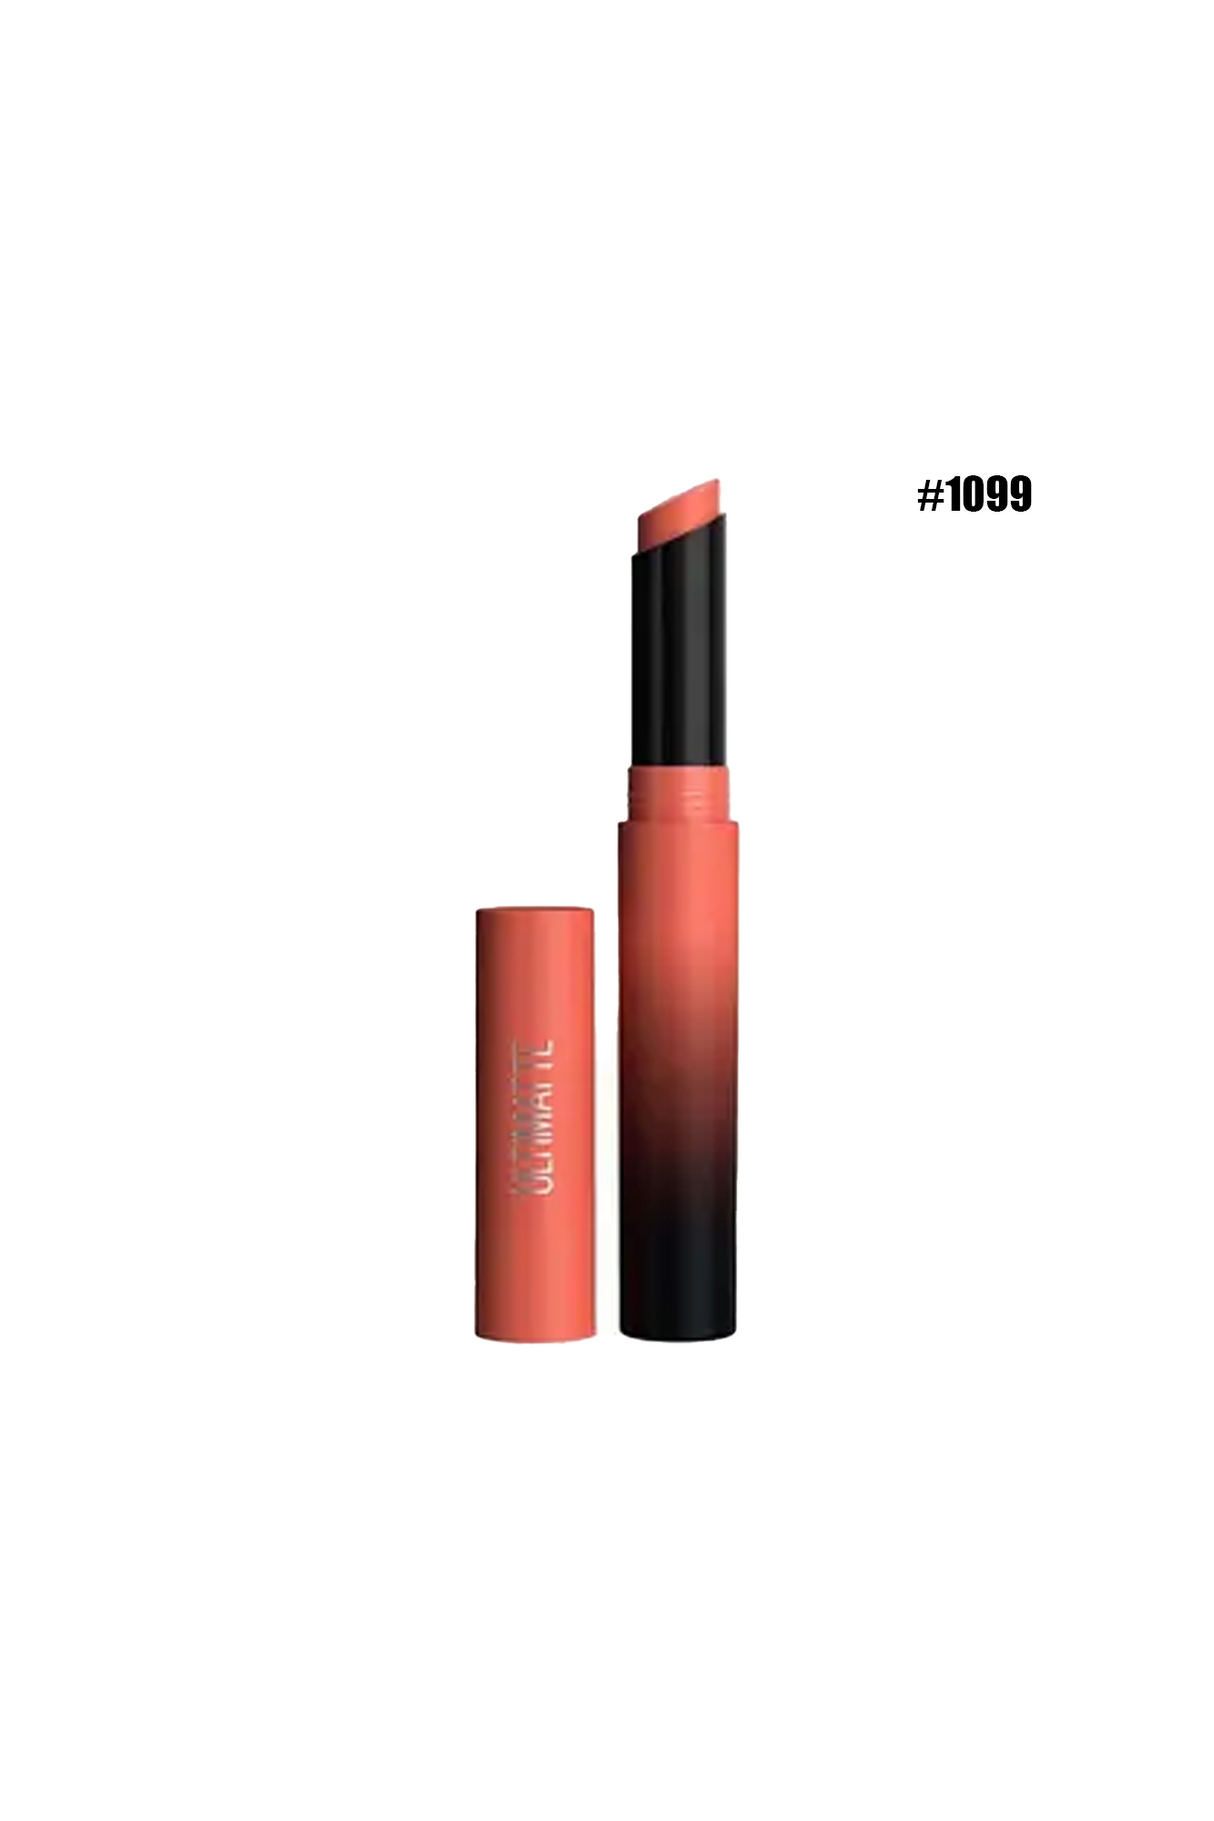 maybelline lipstick ultimatte 1099